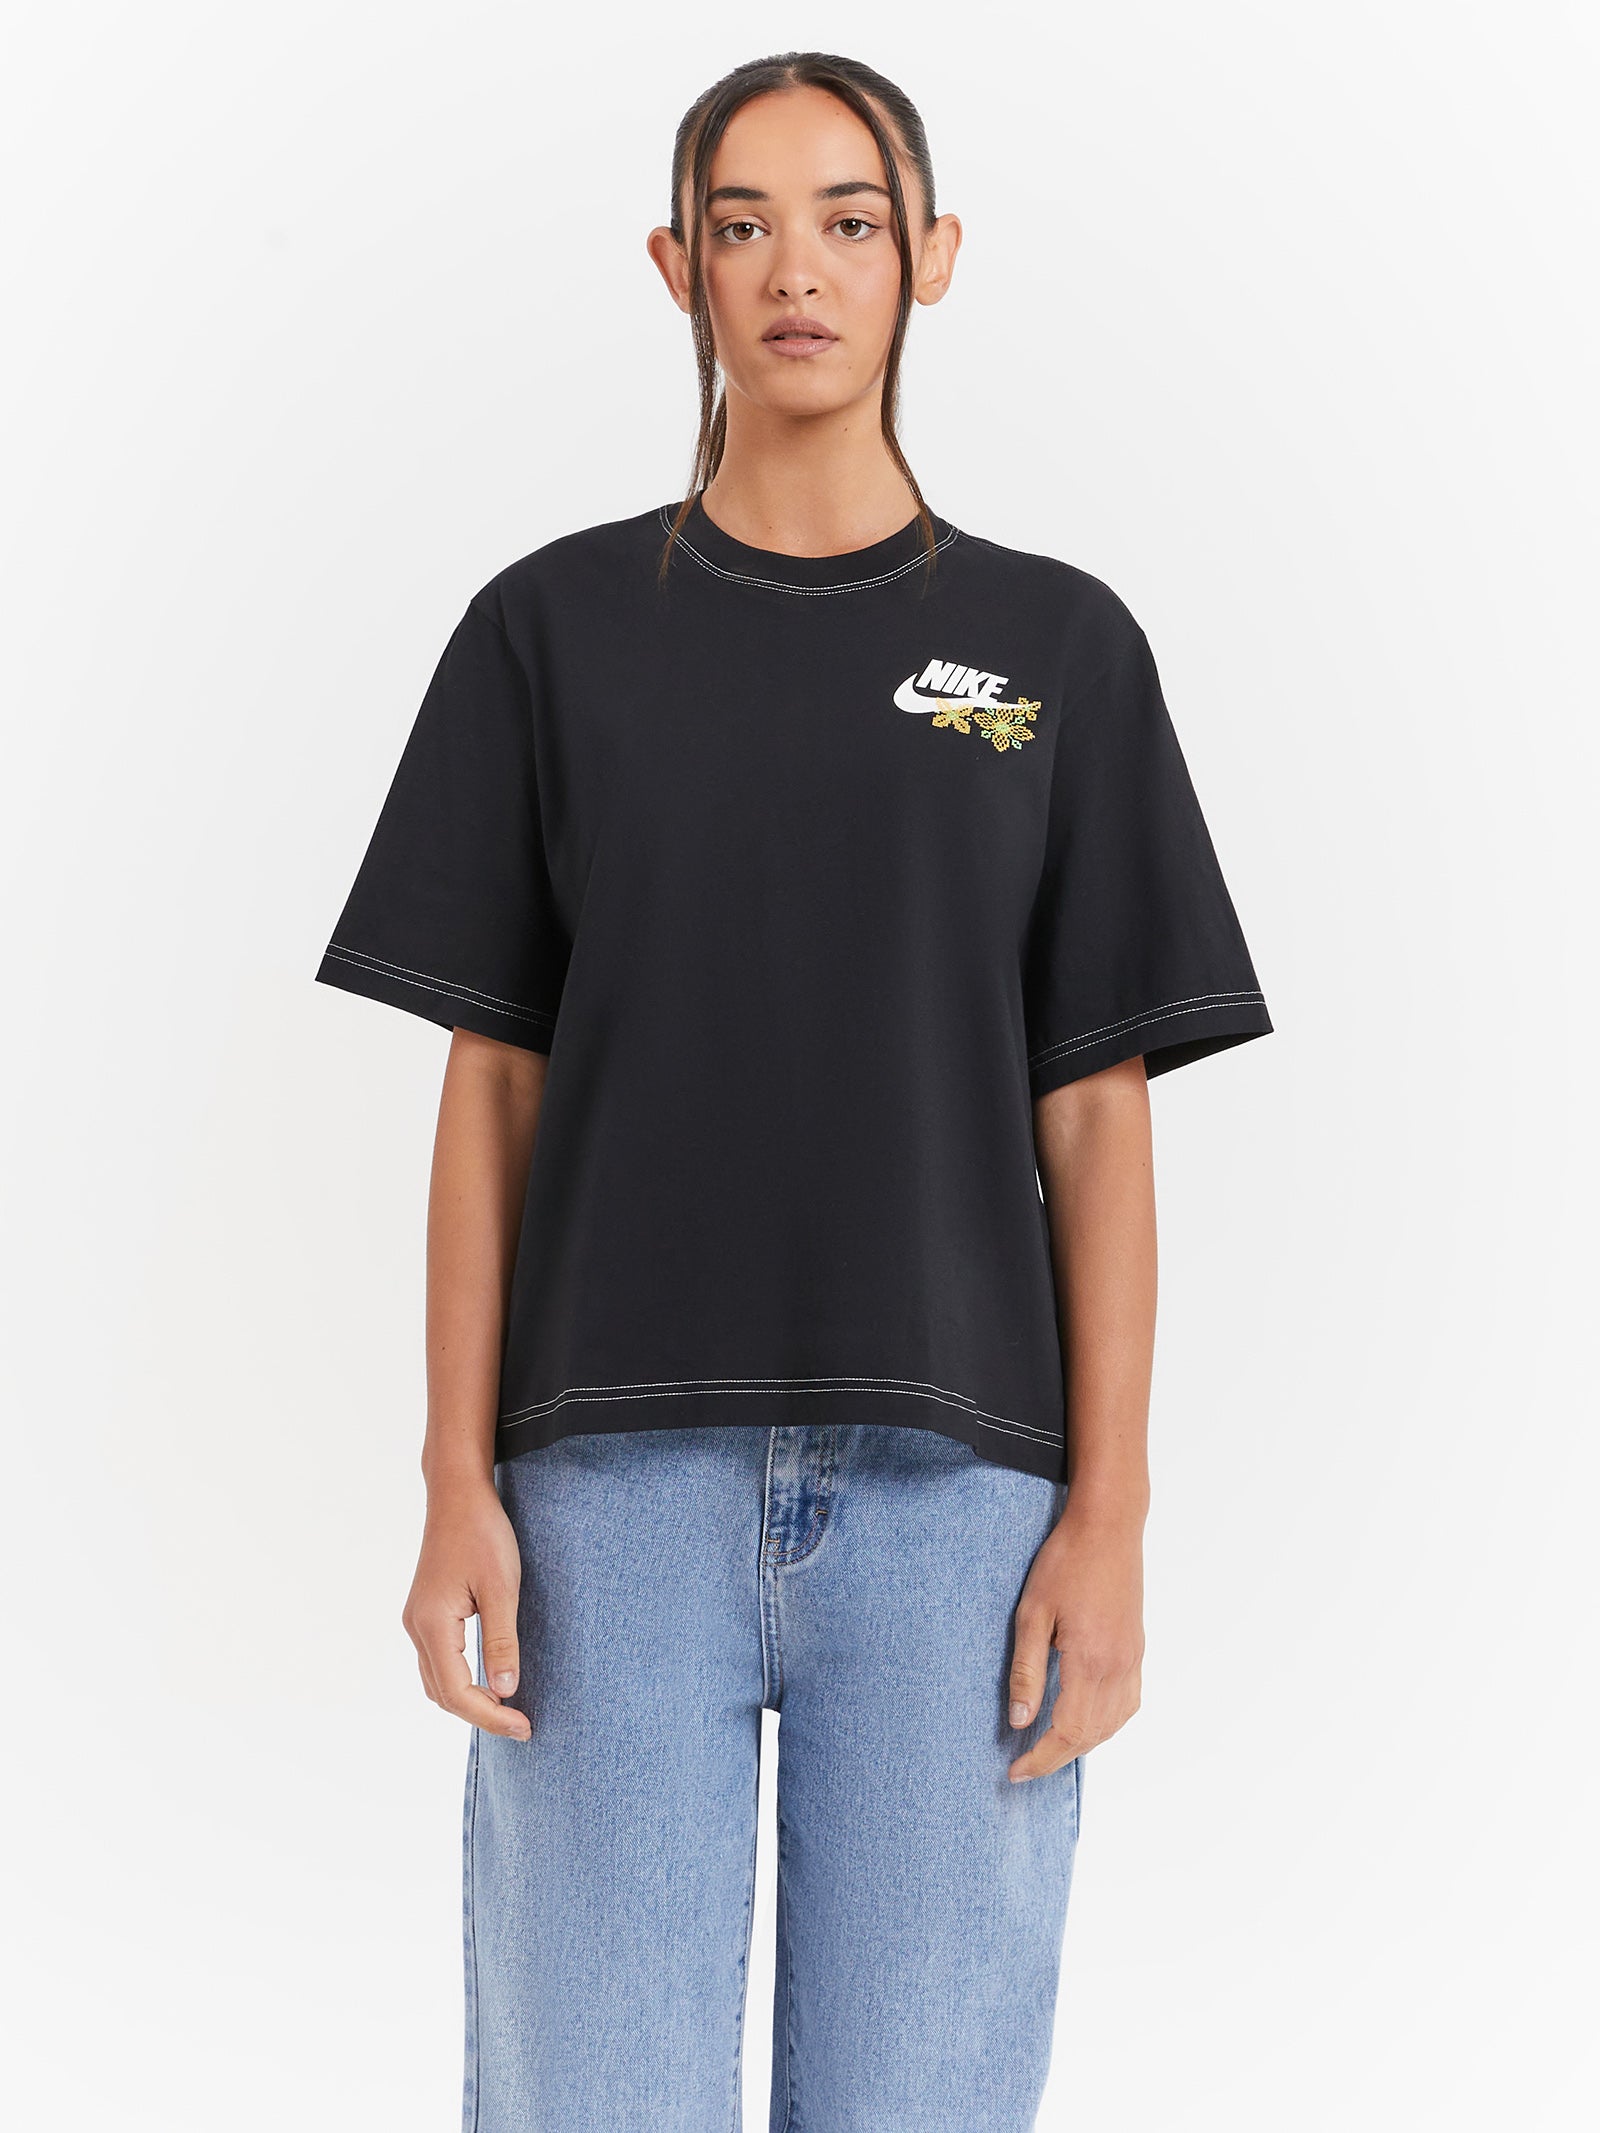 Sportswear OC1 in Glue Store Boxy Black T-Shirt Short - Sleeve